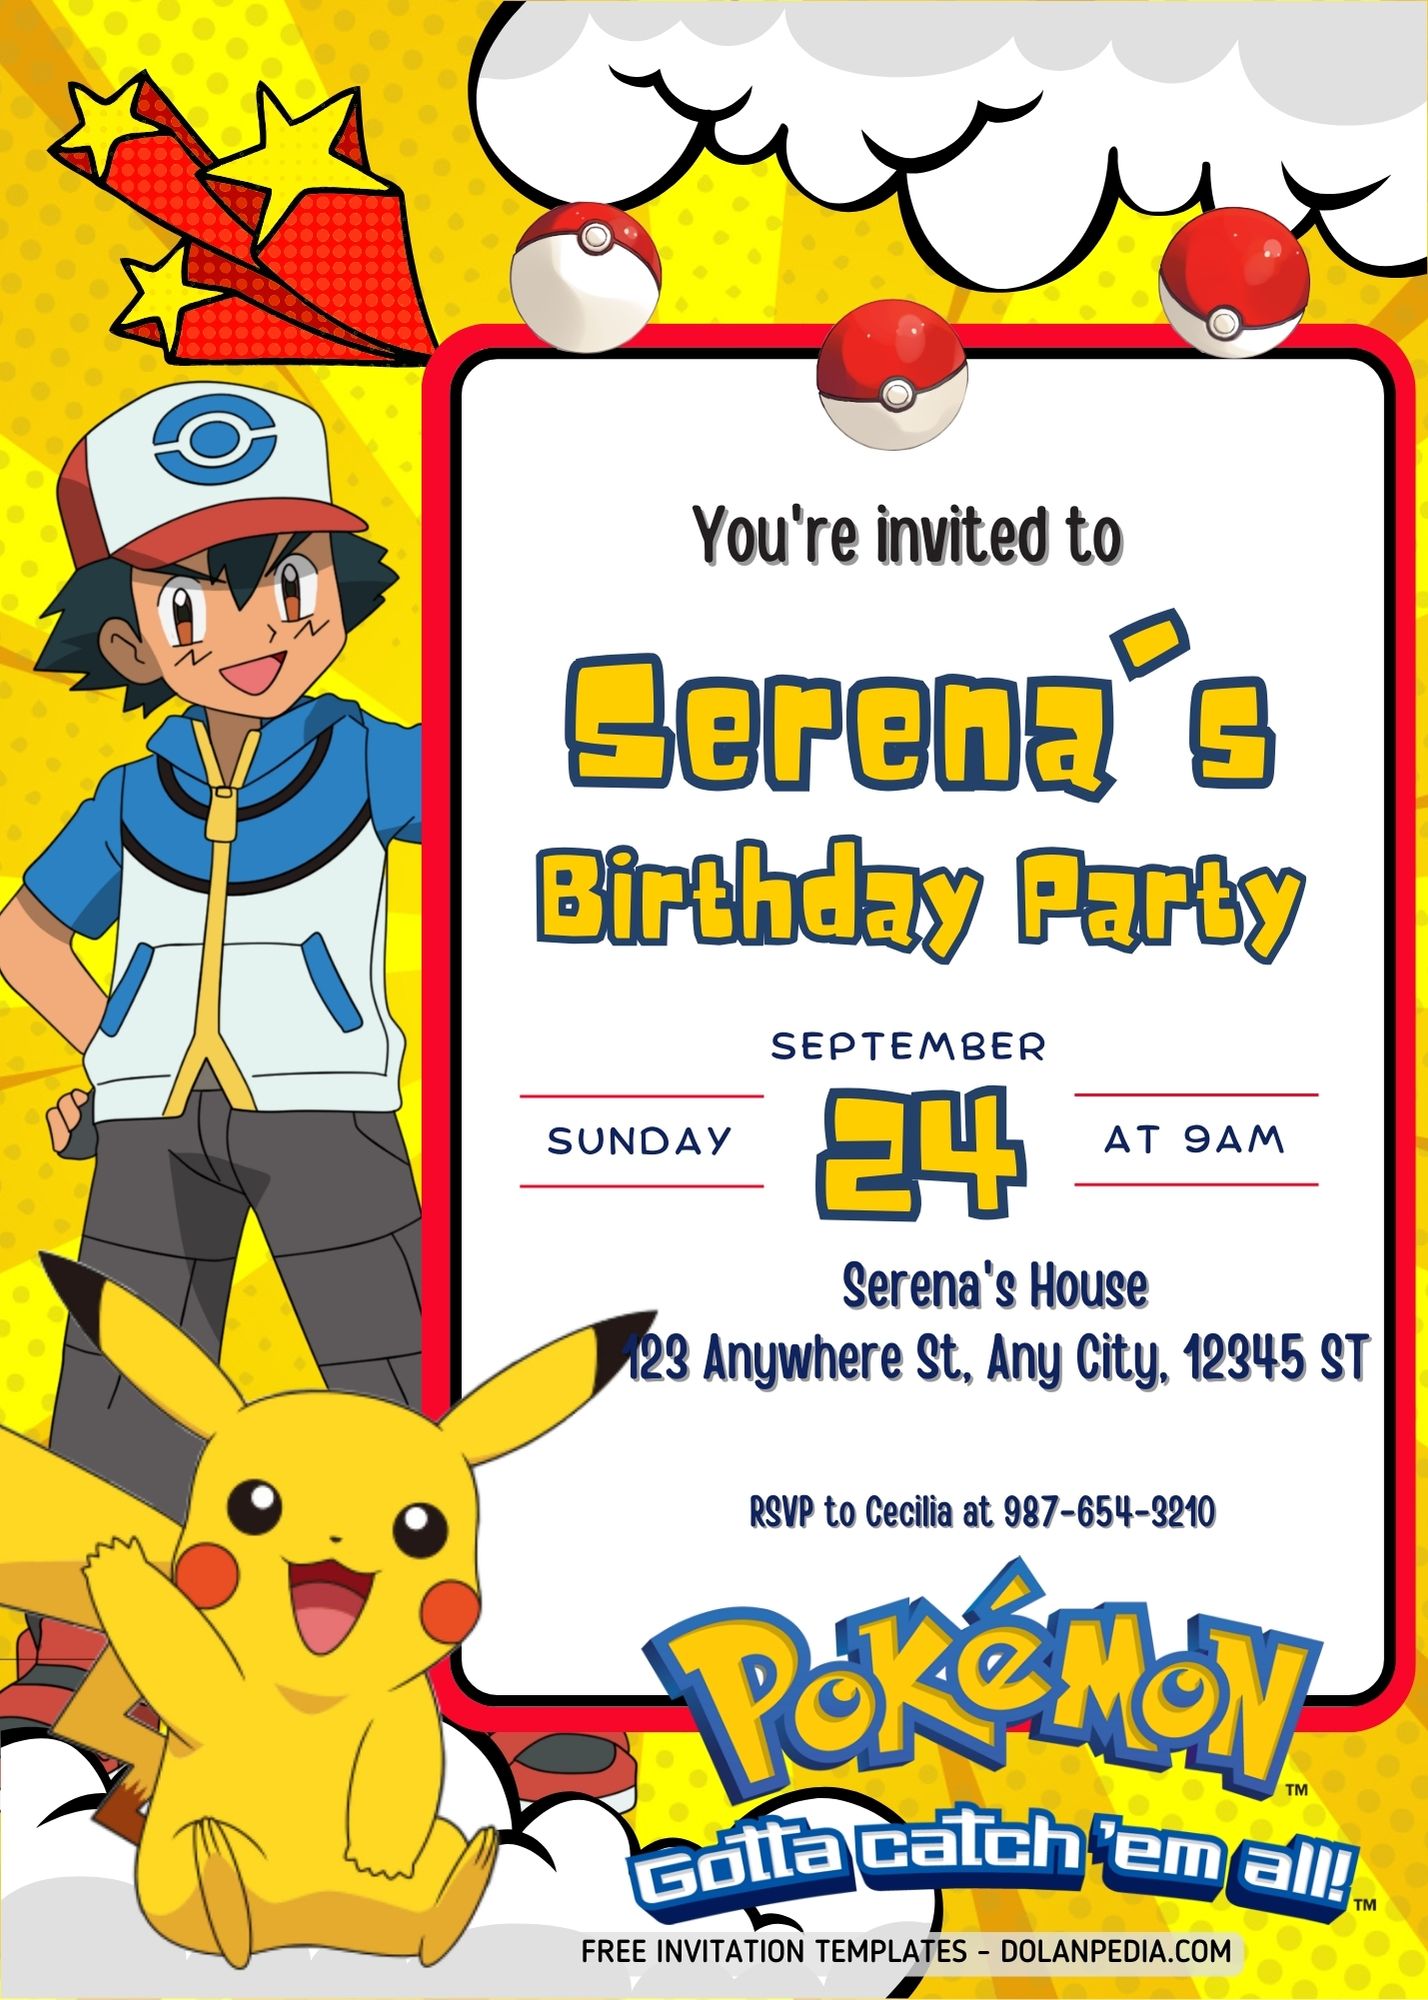 FREE Catch Them All Pokemon Party Invitation Templates